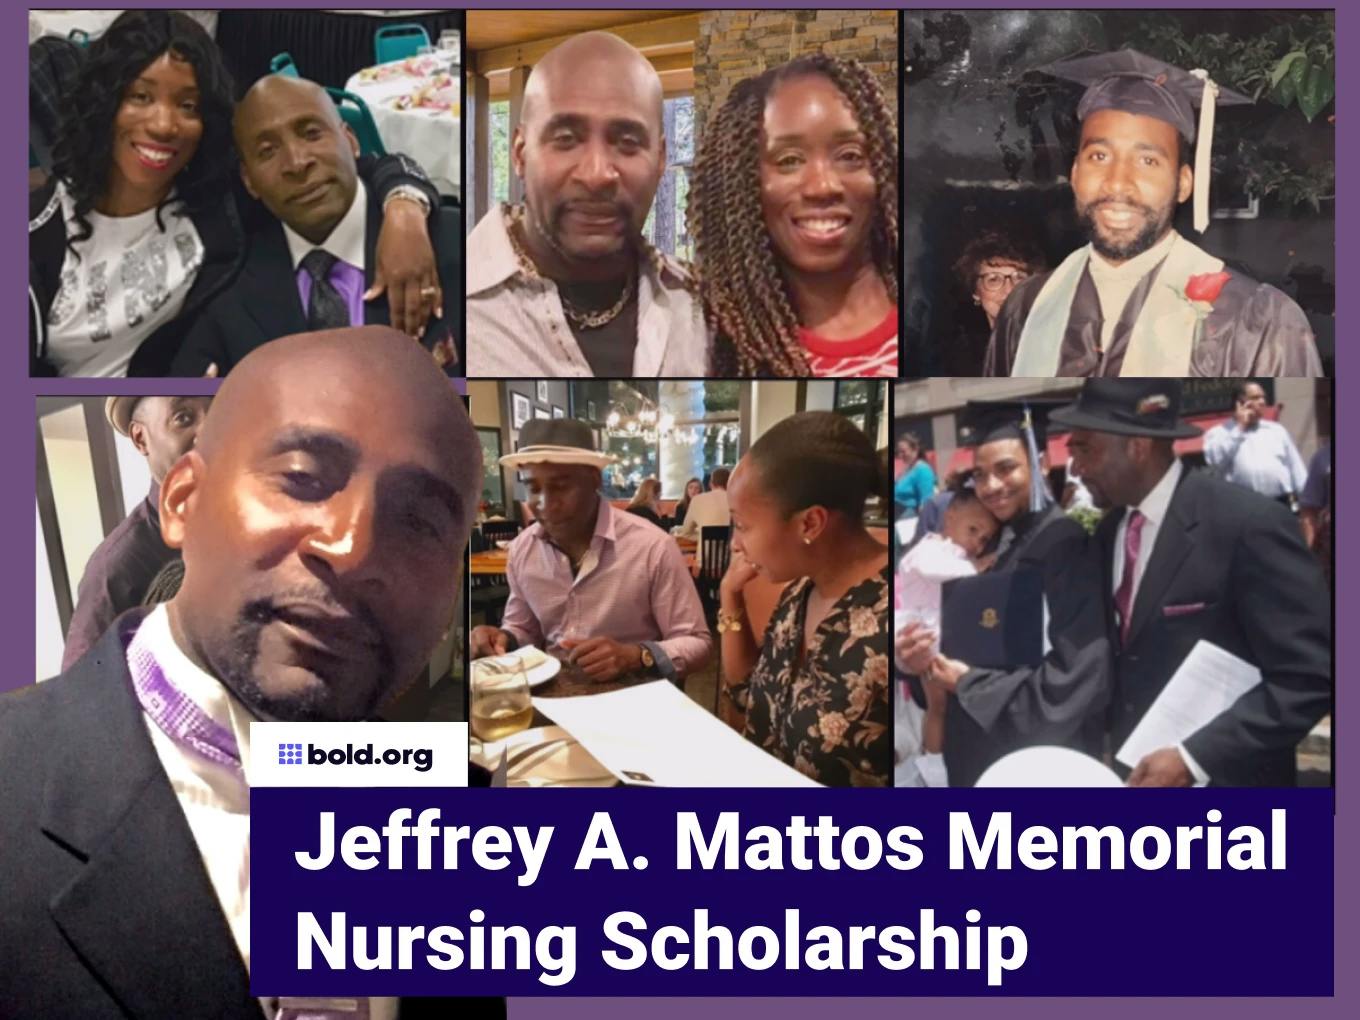 Jeffrey A. Mattos Memorial Nursing Scholarship